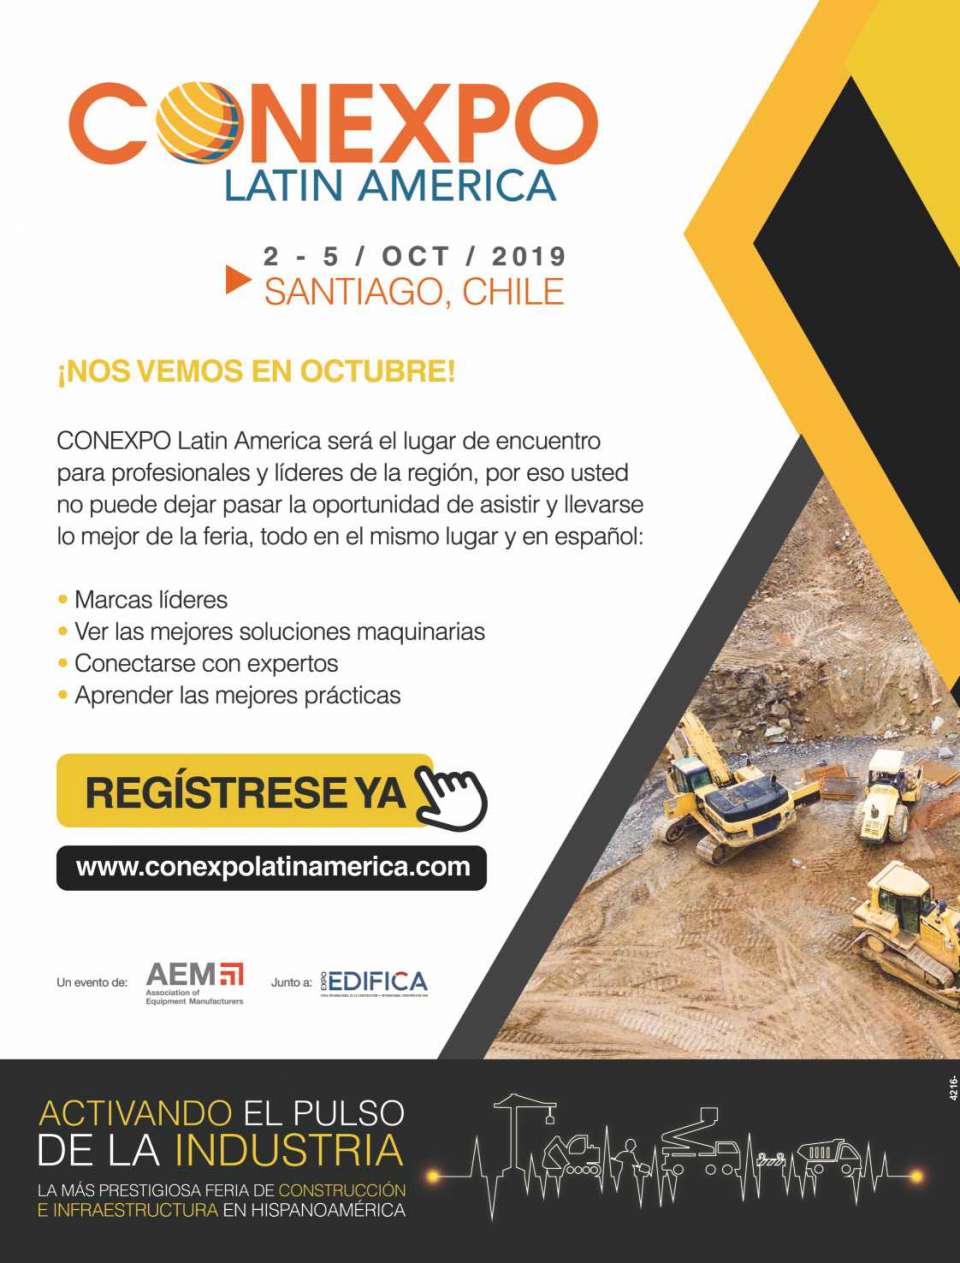 CONEXPO Latin America 2019 from 2 to 5 October 2019 in Espacio Riesco, Santiago de Chile. - Participate in the largest fair of construction and infrastructure in Hispanic America.